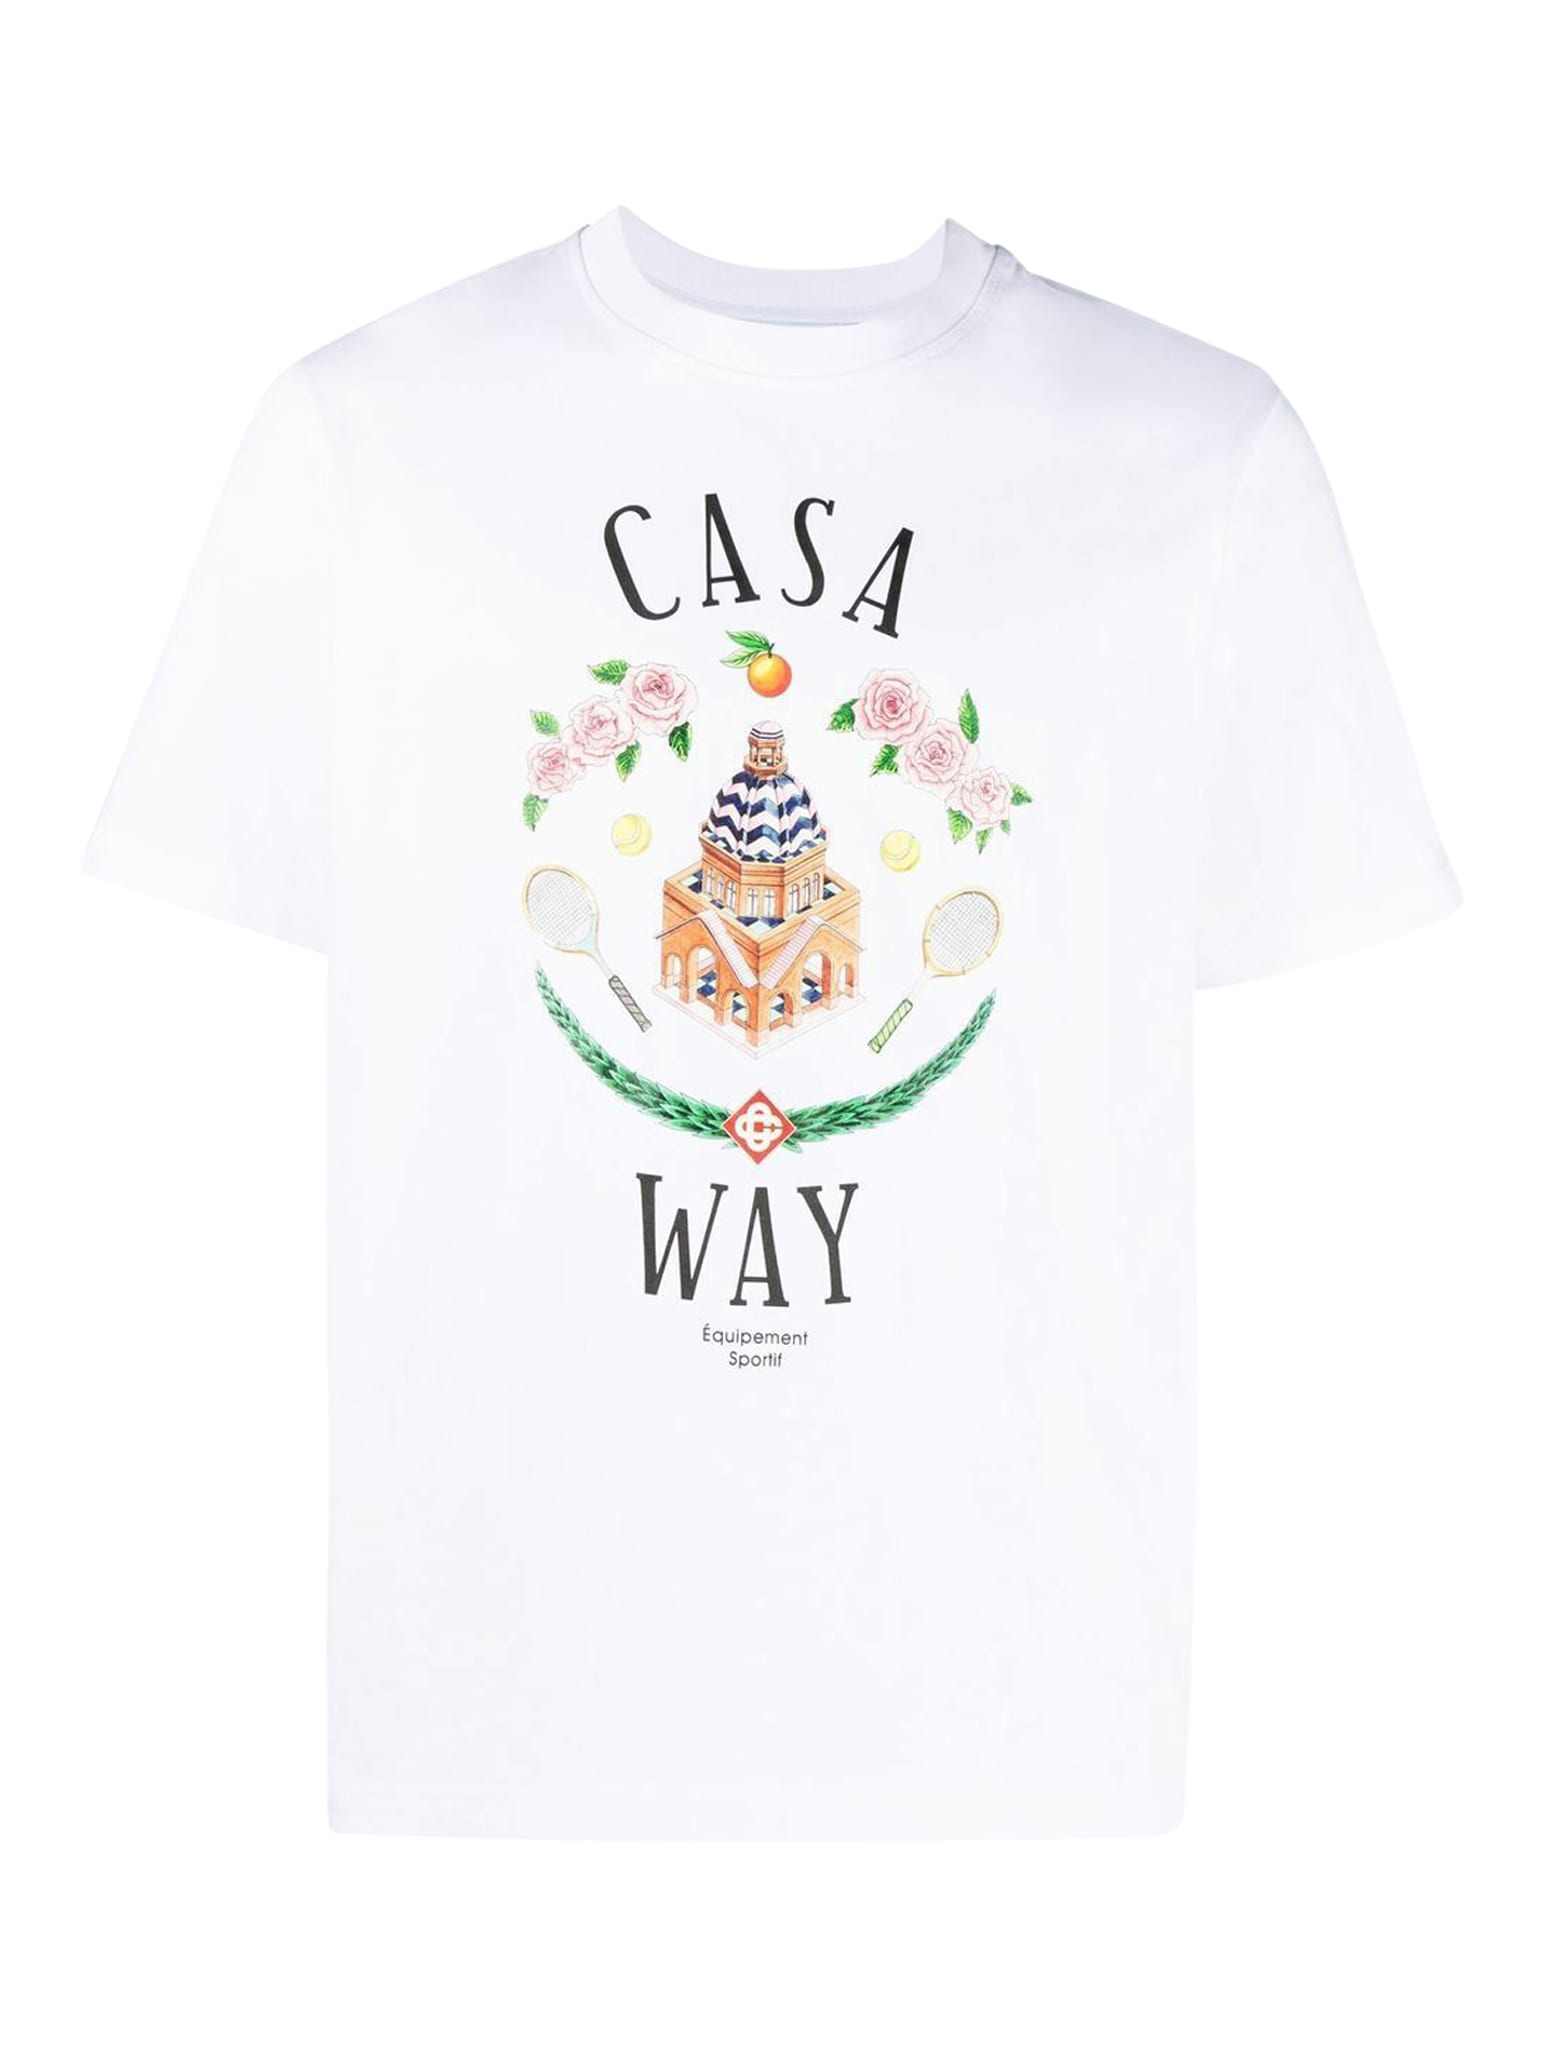 Casablanca Casa Way Printed T-shirt